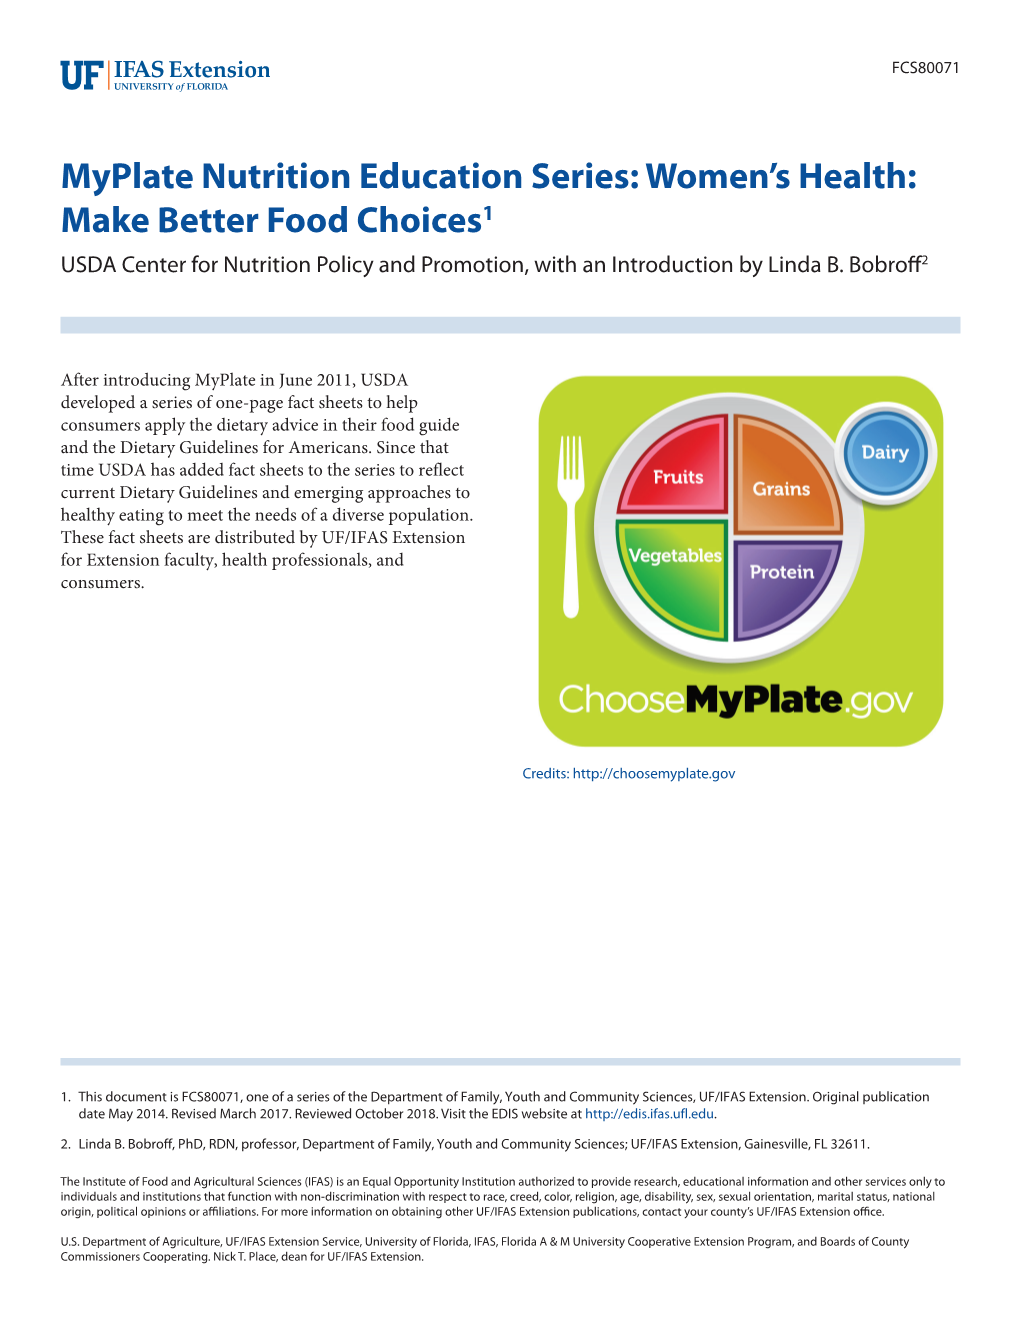 Myplate Nutrition Education Series: Women's Health: Make Better Food